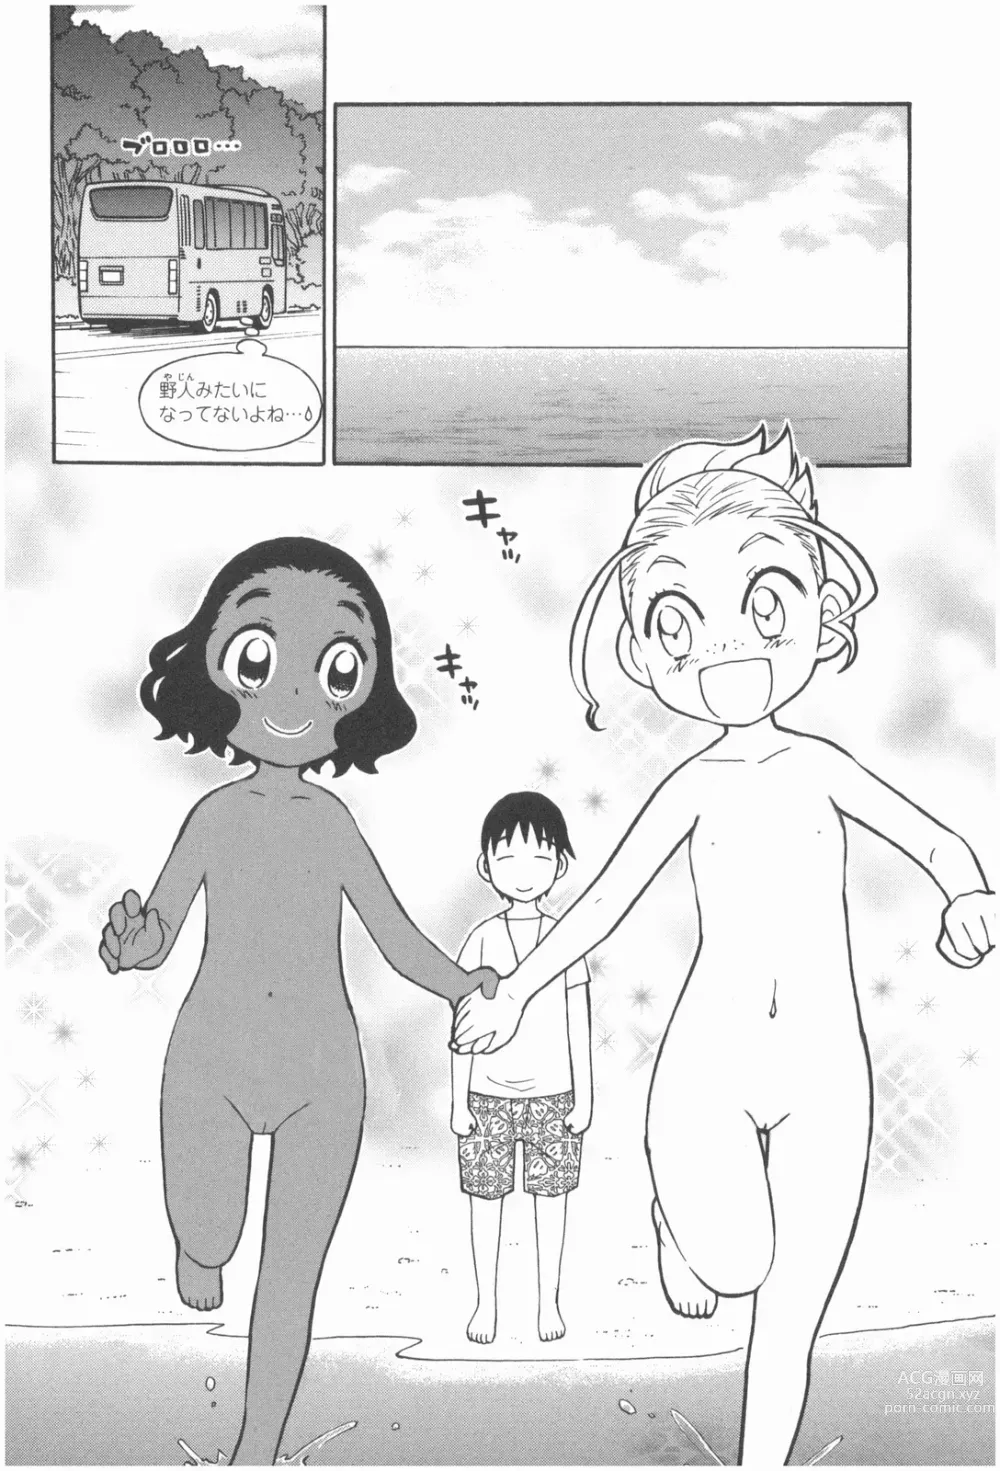 Page 4 of doujinshi Terao the Next Generation Machine